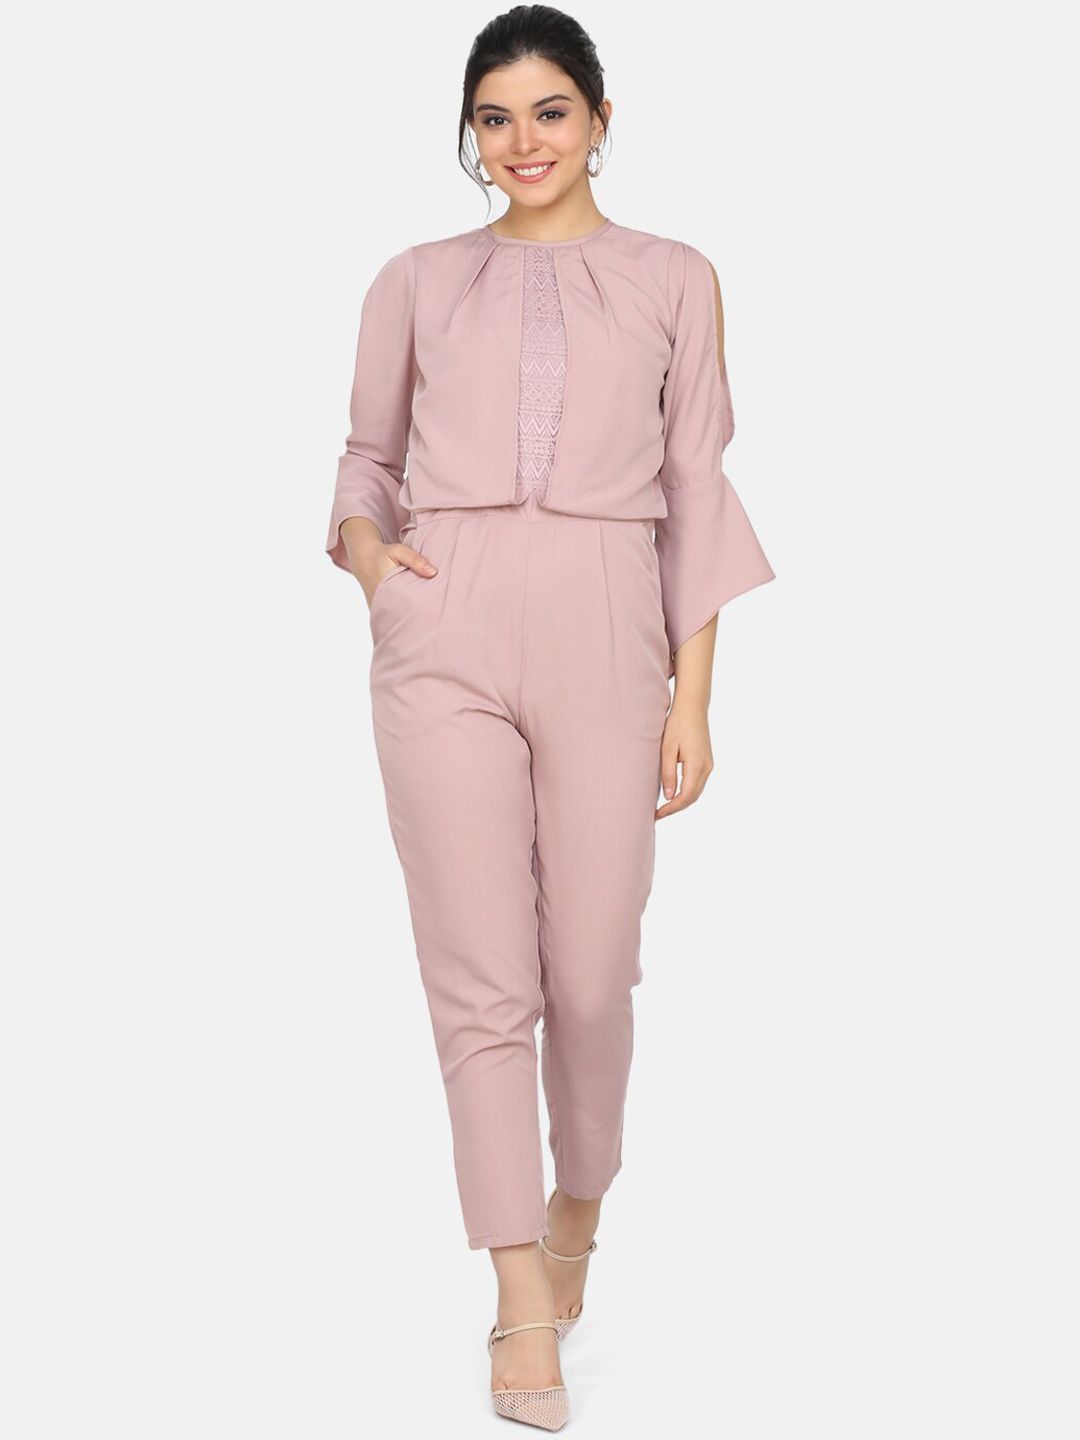 Eavan Women Pink Solid Basic Jumpsuit Price in India